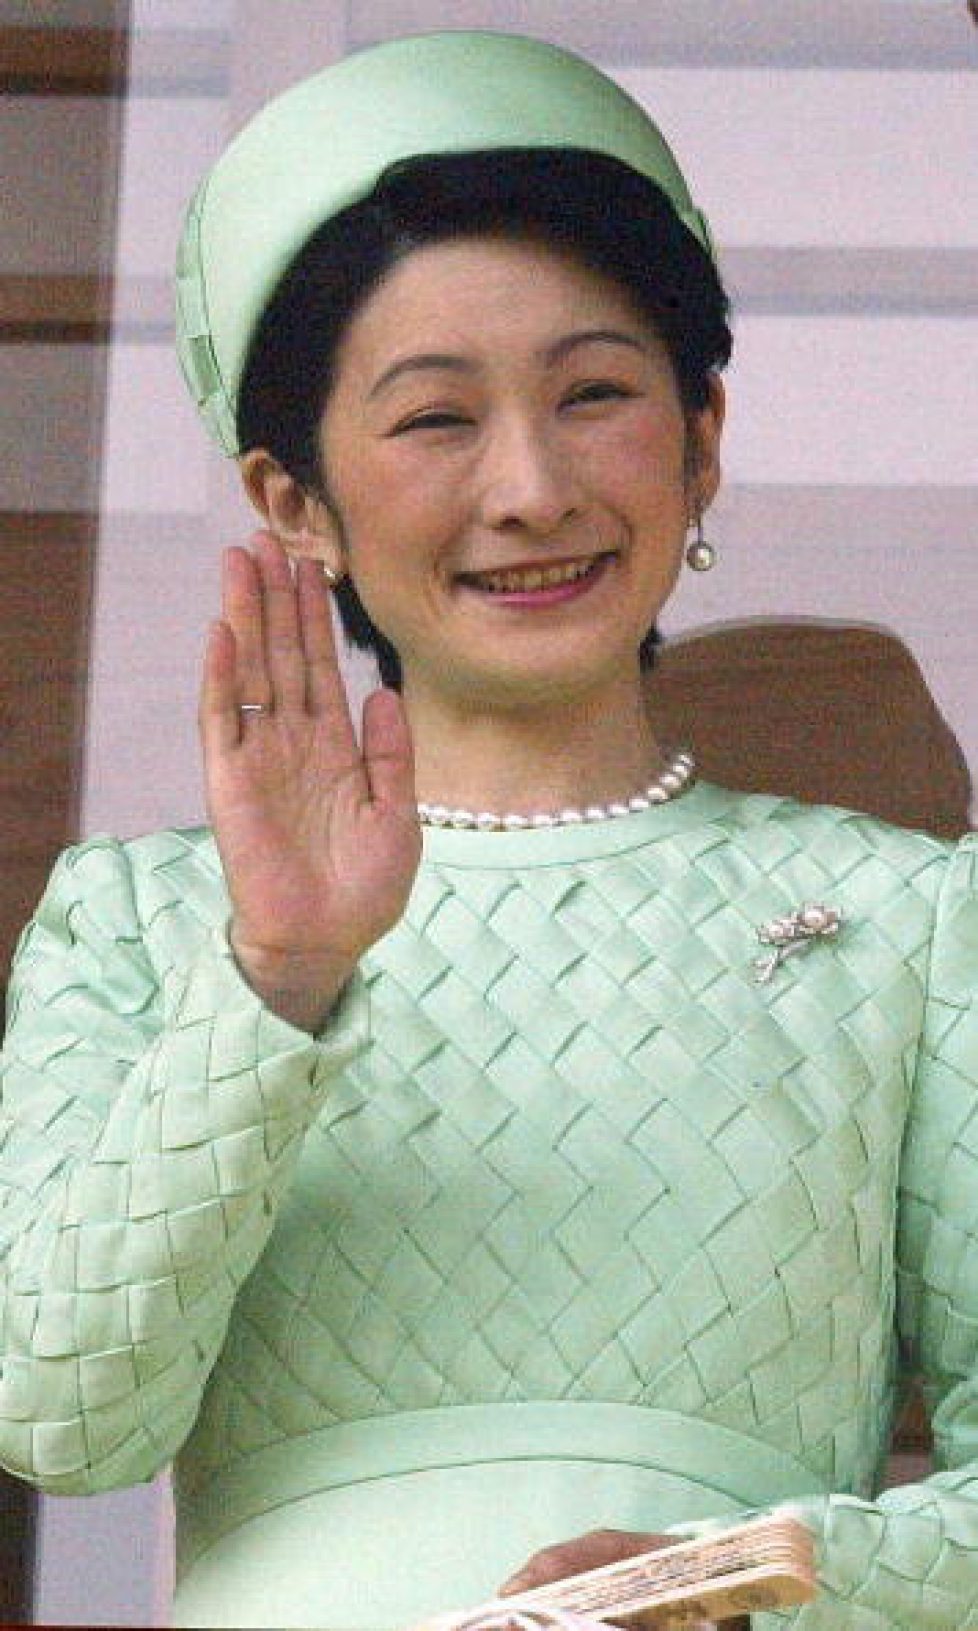 Emperor Akihito of Japan Celebrates His 73rd Birthday